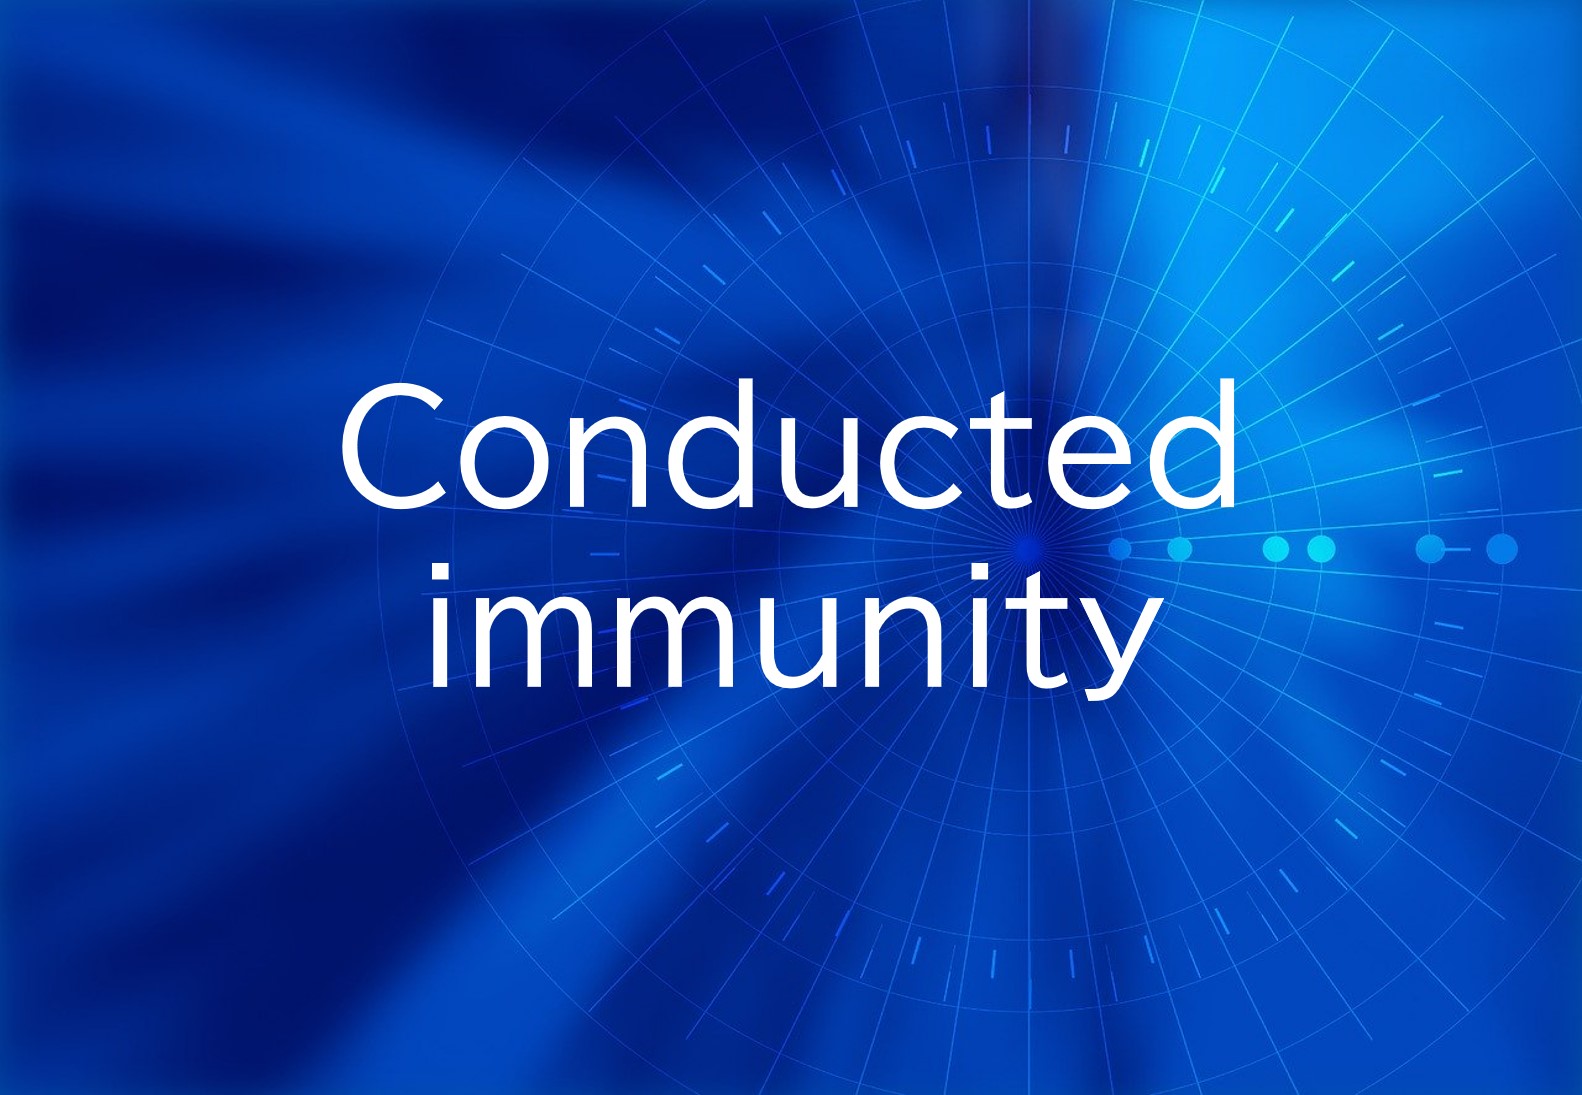 Conducted immunity